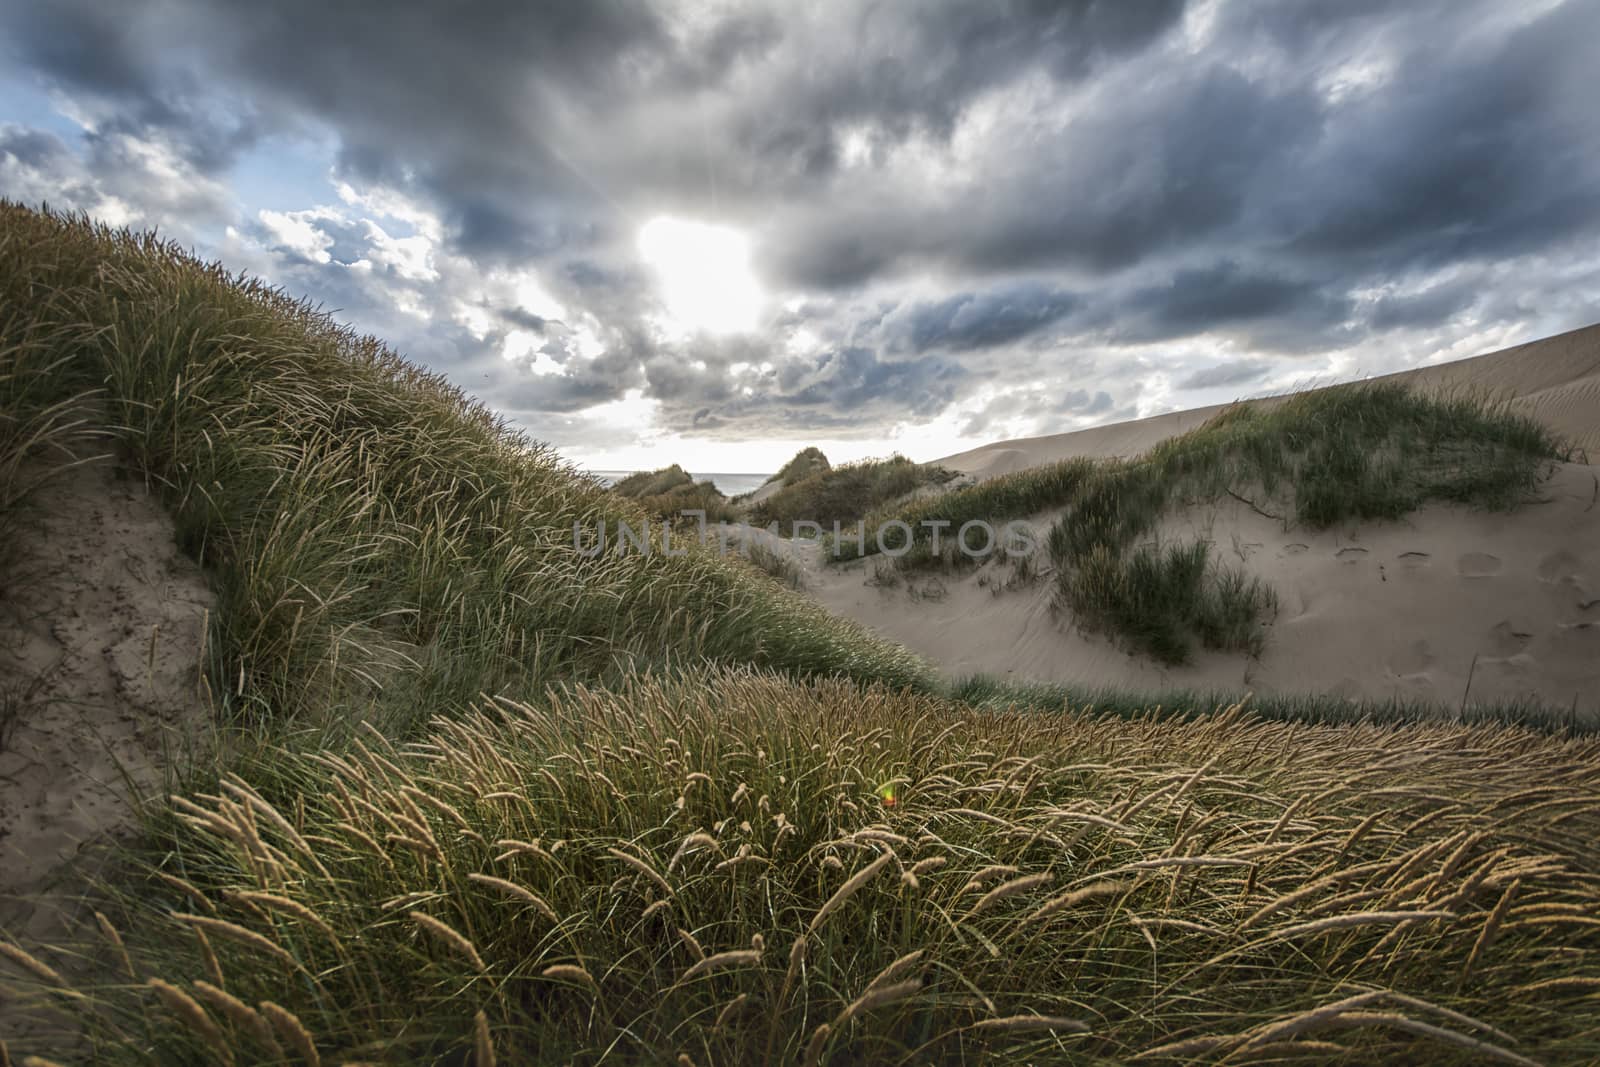 Photograph of sand dunes in Denmark